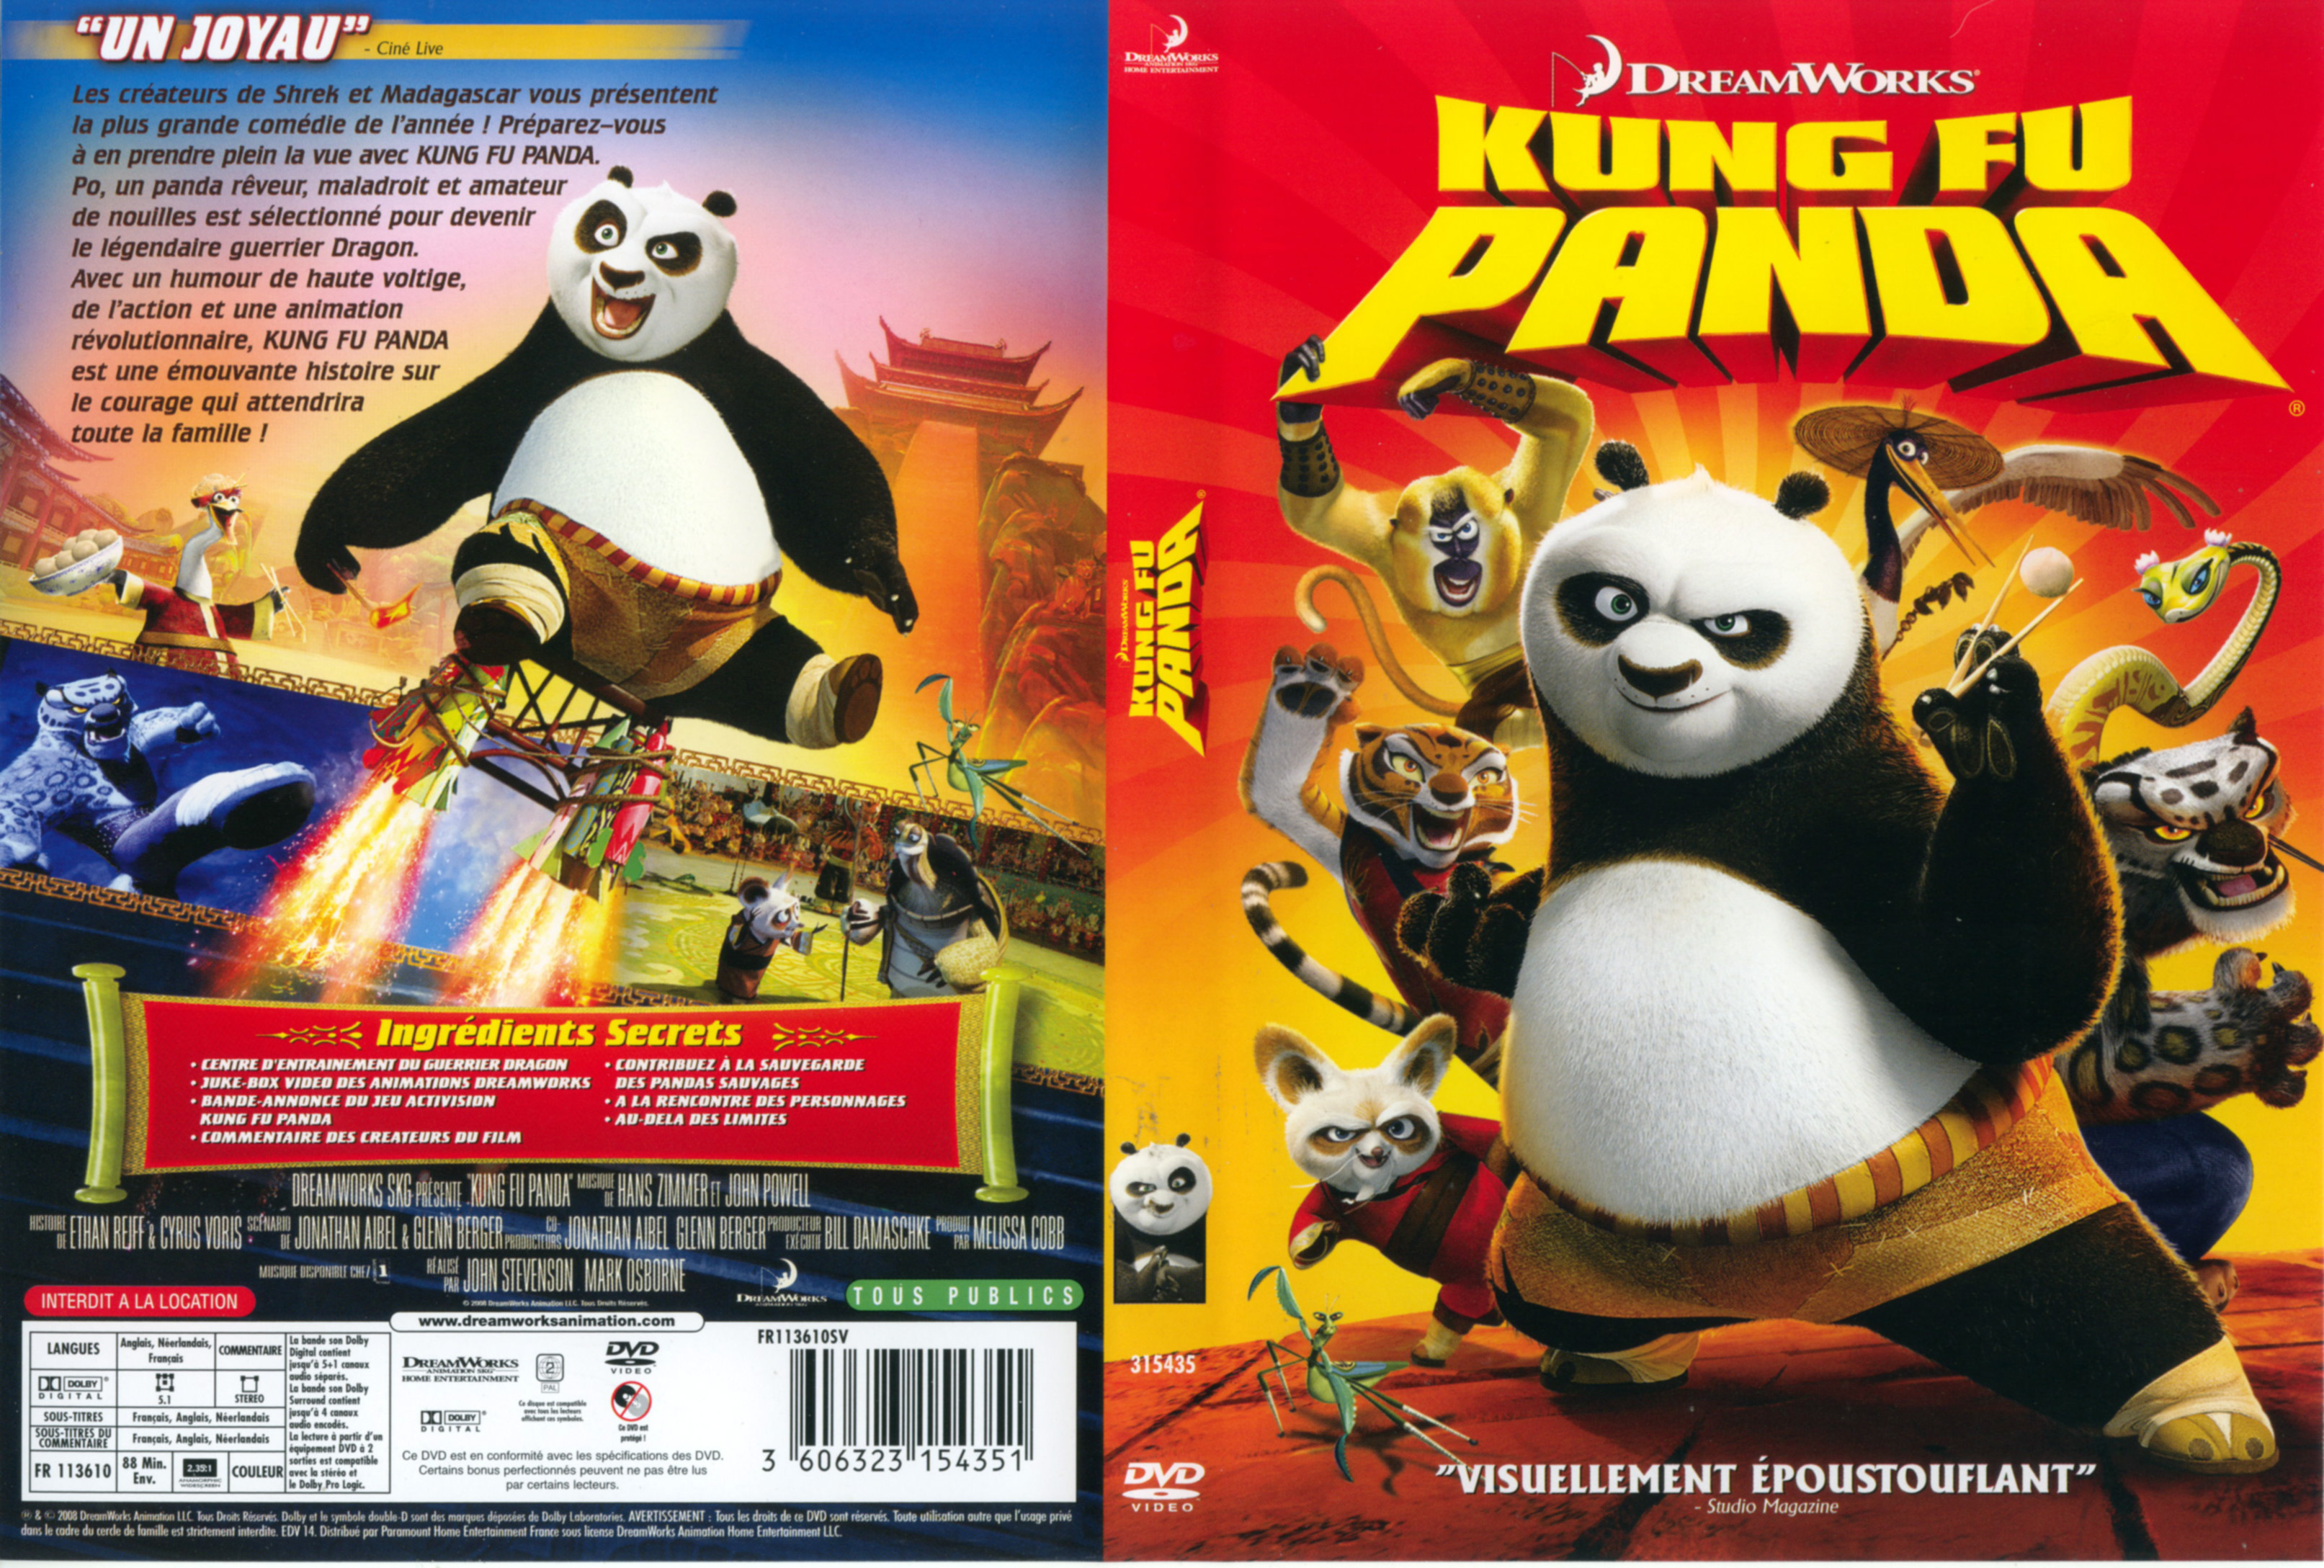 Jaquette DVD Kung fu panda